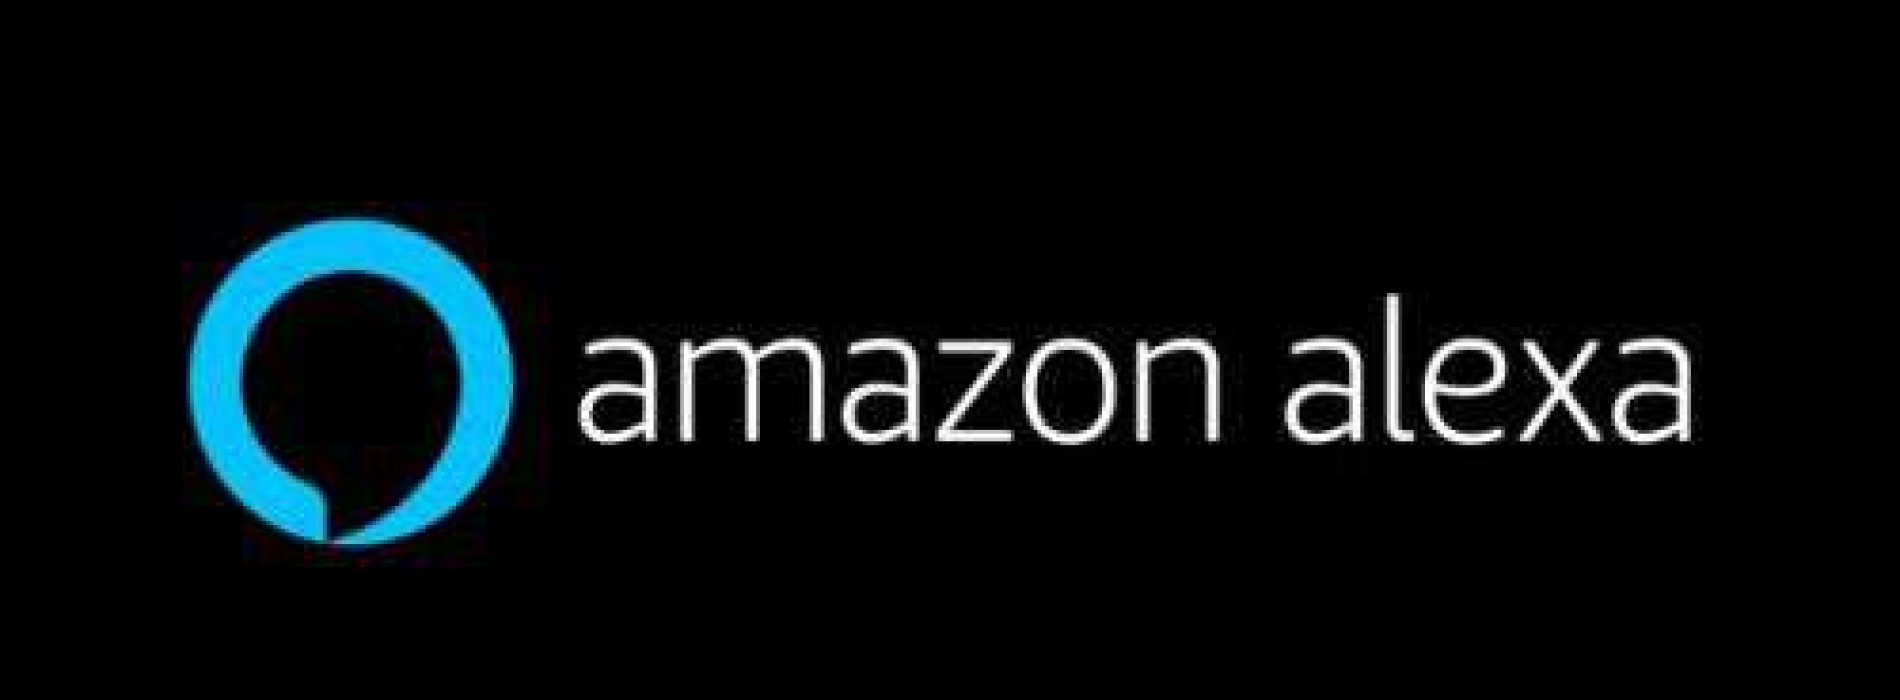 ixigo Skill for Amazon Alexa launched in India